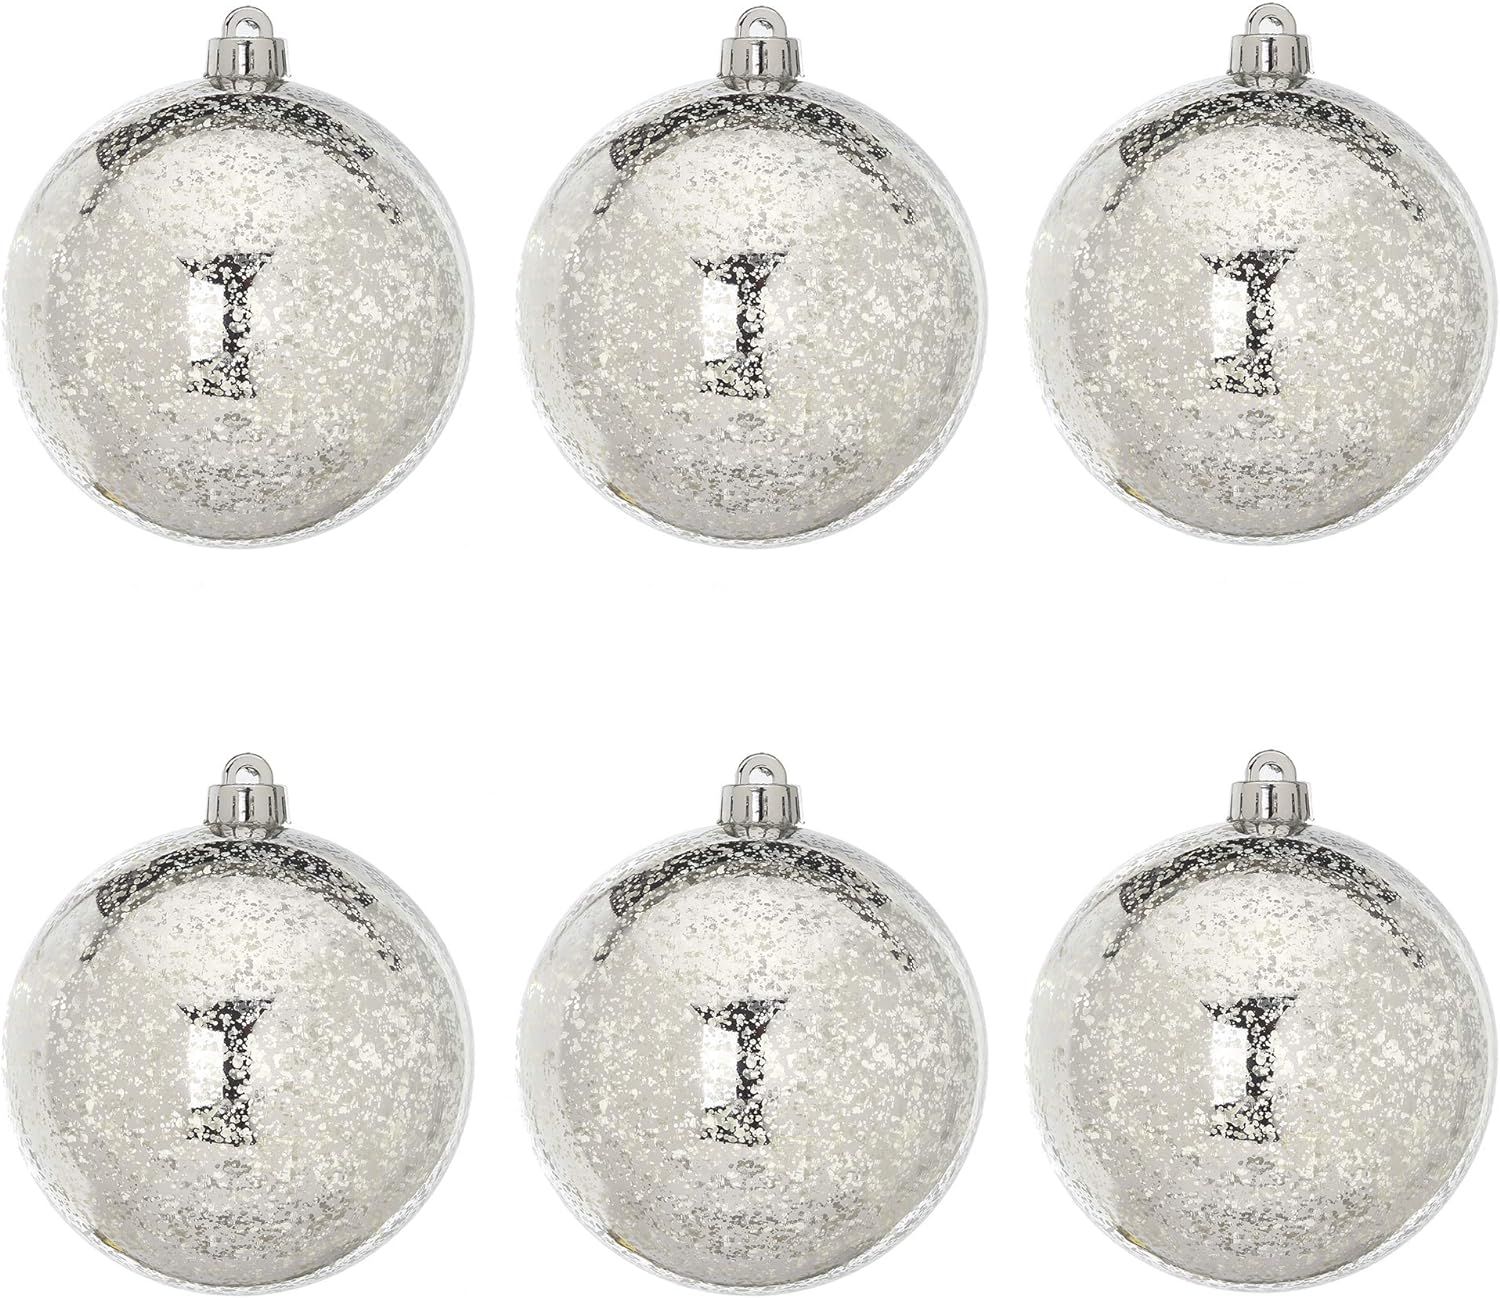 Regency International 80 MM VP Mercury Ball Ornament Box of 6 - Silver | Amazon (US)